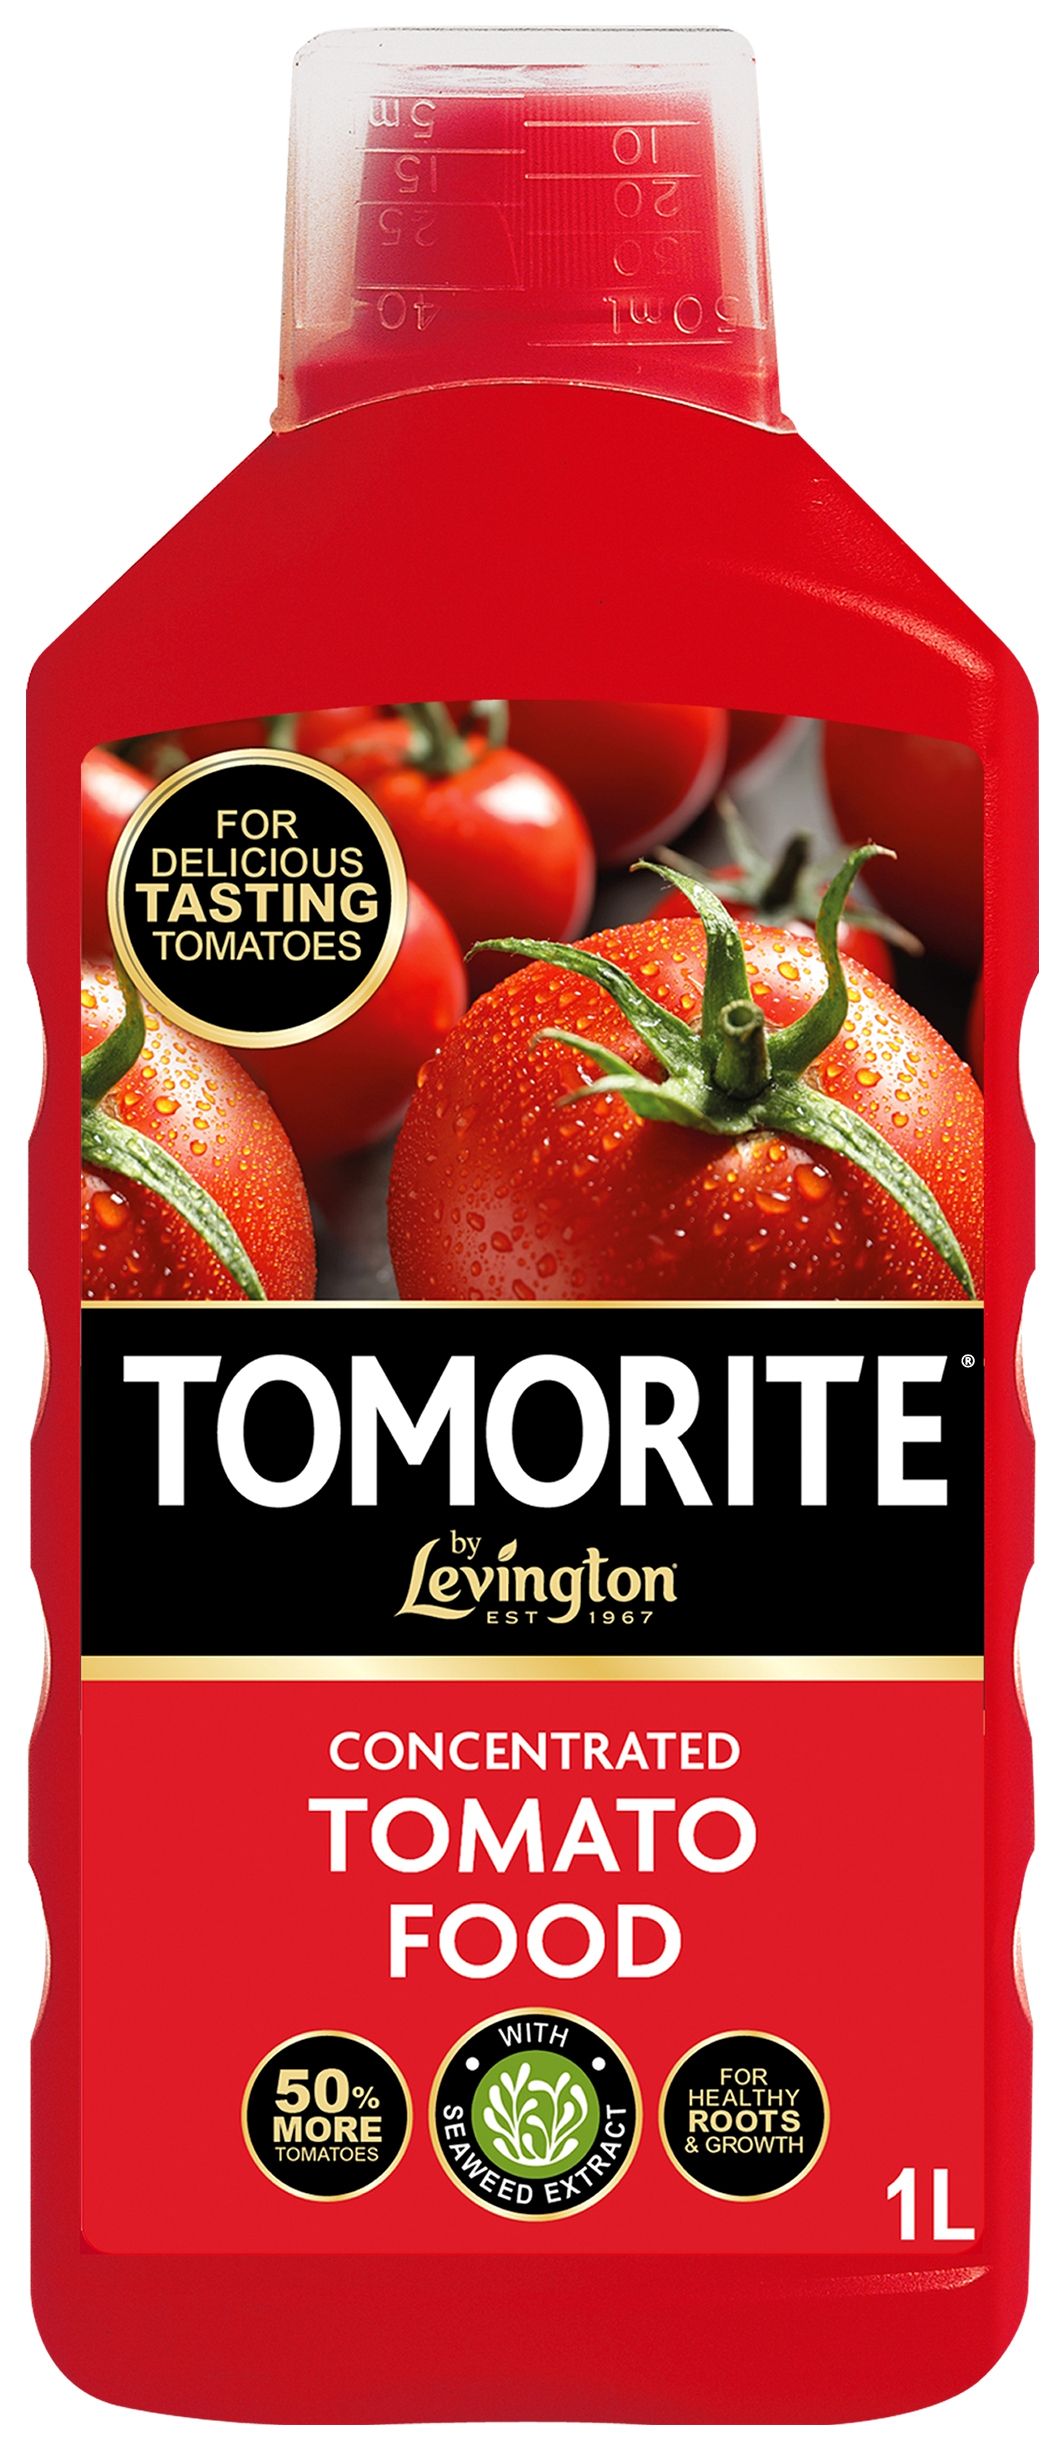 Levington Tomorite Plant Food - 1L